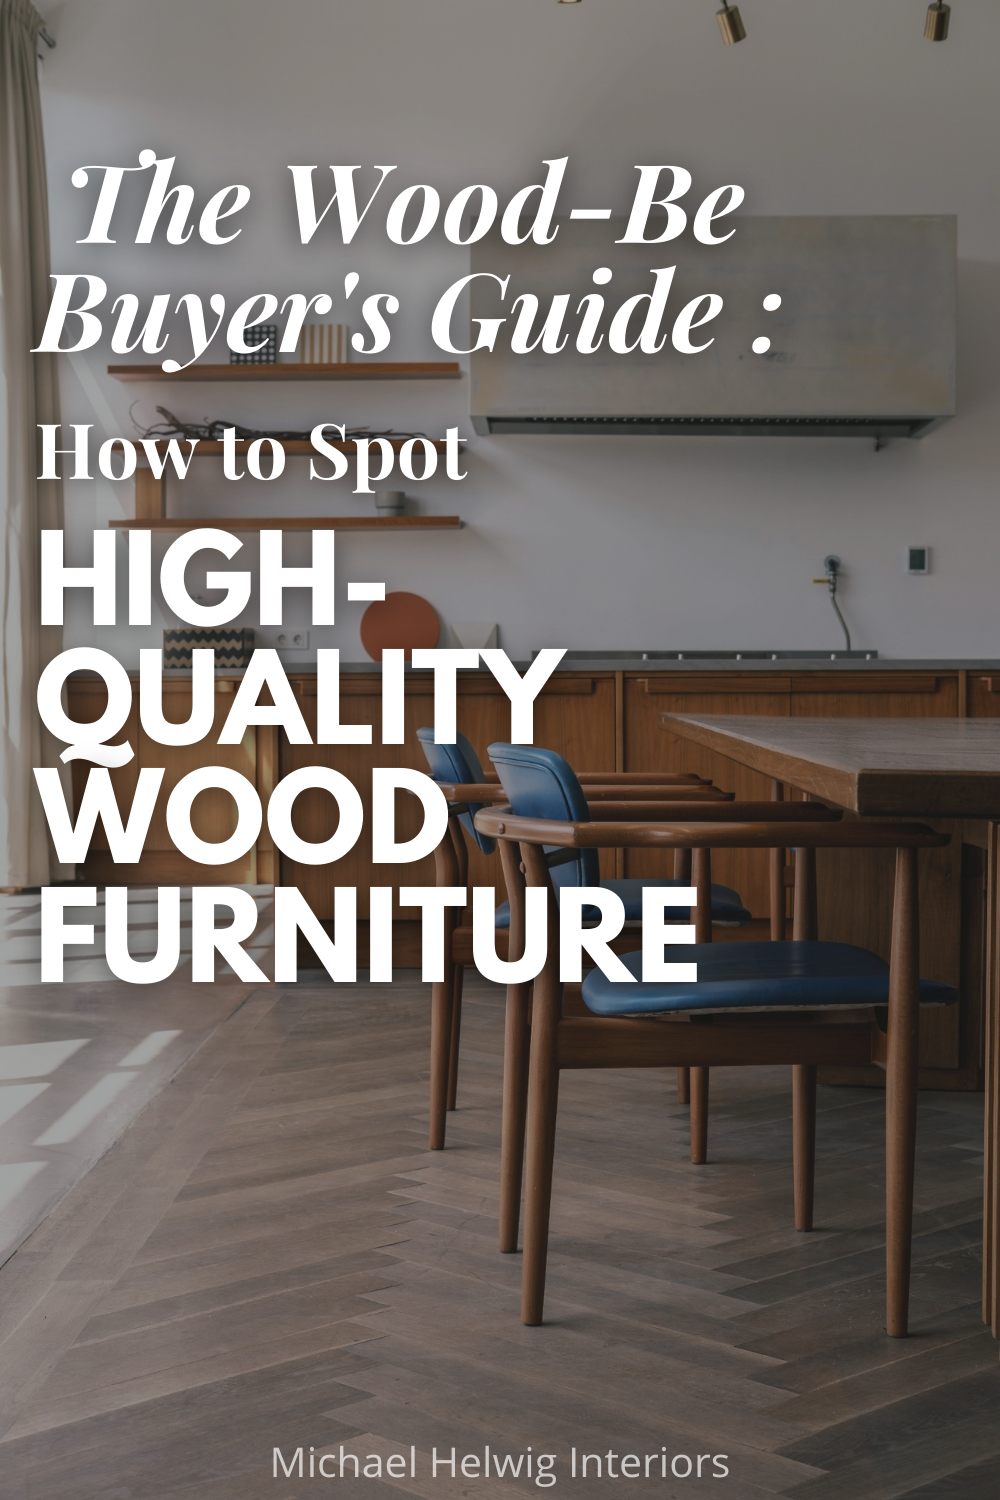 https://images.squarespace-cdn.com/content/v1/56e07a3462cd9489f5655064/482e116a-1b2a-4f71-9753-a5829c0a859c/The+Wood-be+Buyer%27s+Guide-+How+to+Spot+High-Quality+Wood+Furniture...png